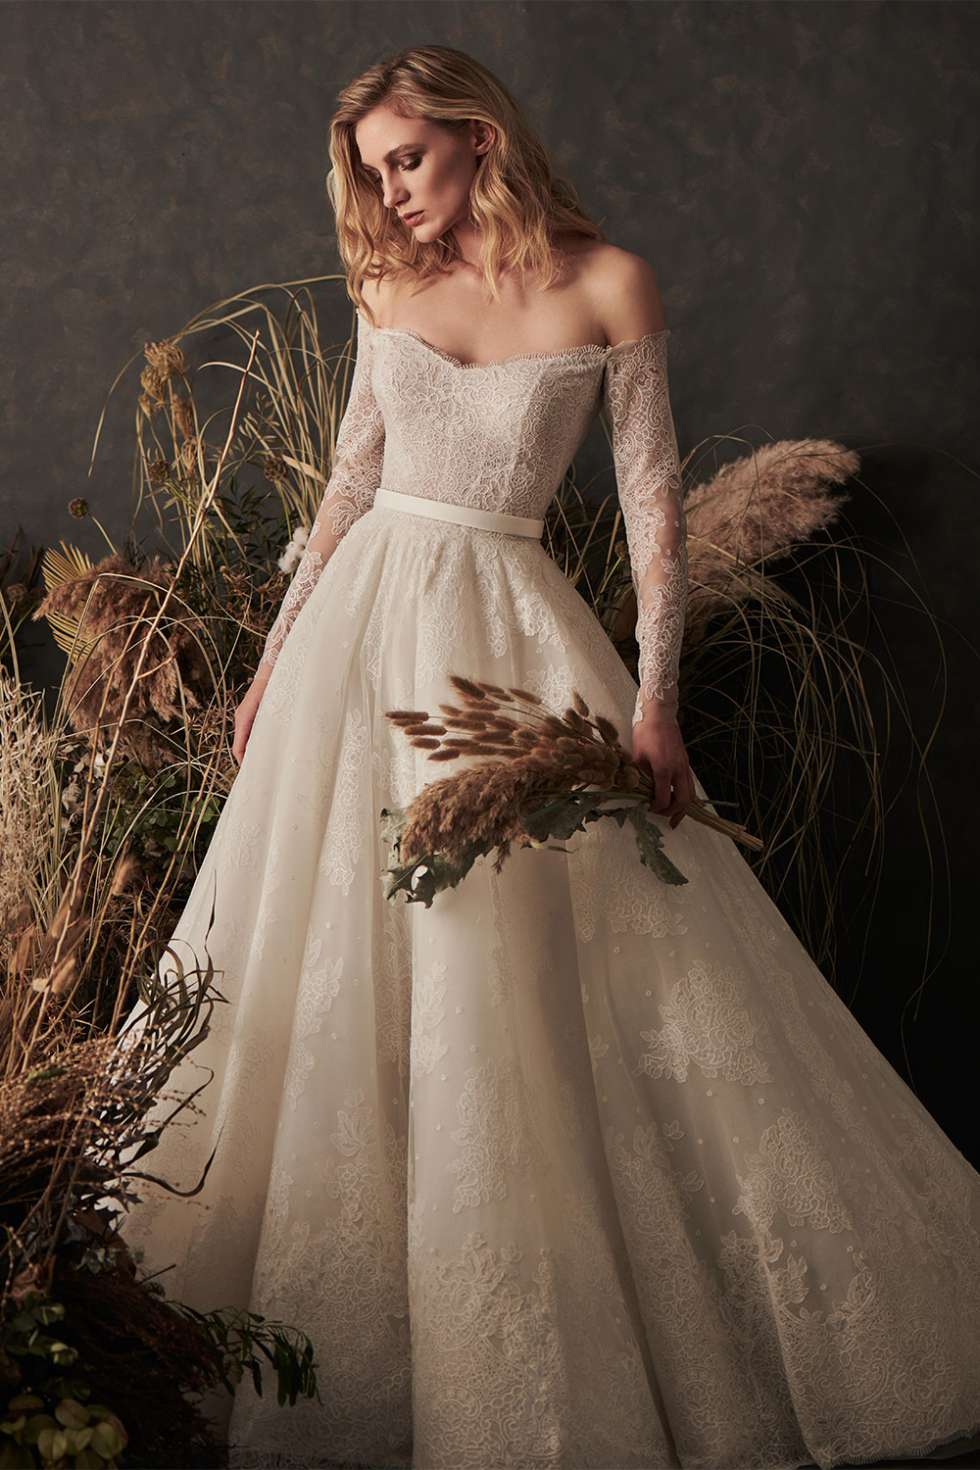 Sandy Nour 2019 Wedding Dress Collection